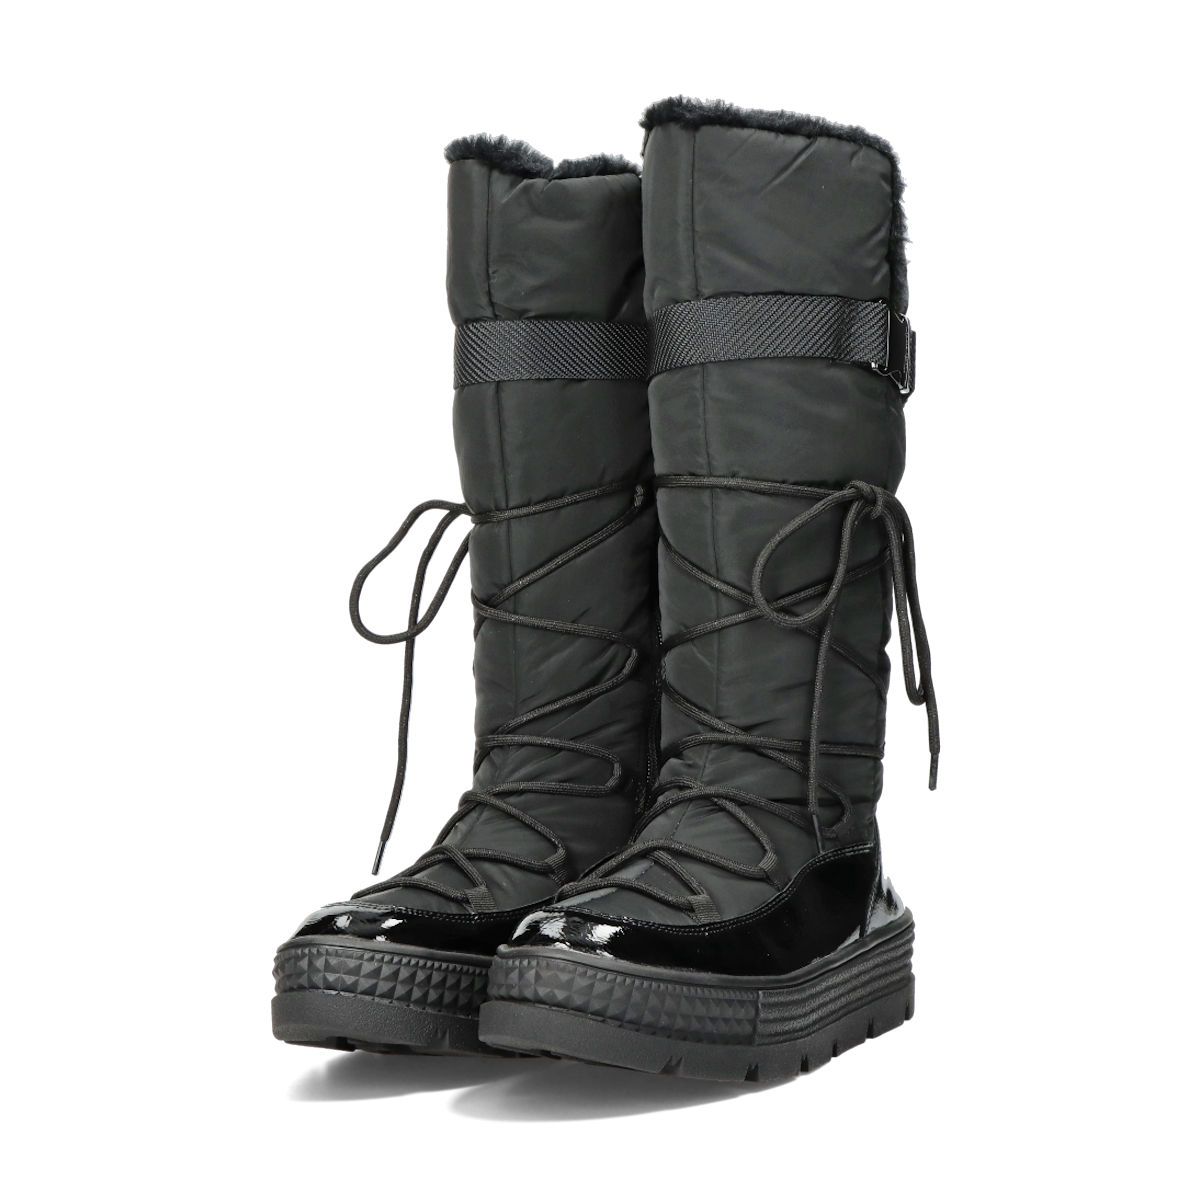 Tamaris women's zippered winter boots black | Robel.shoes